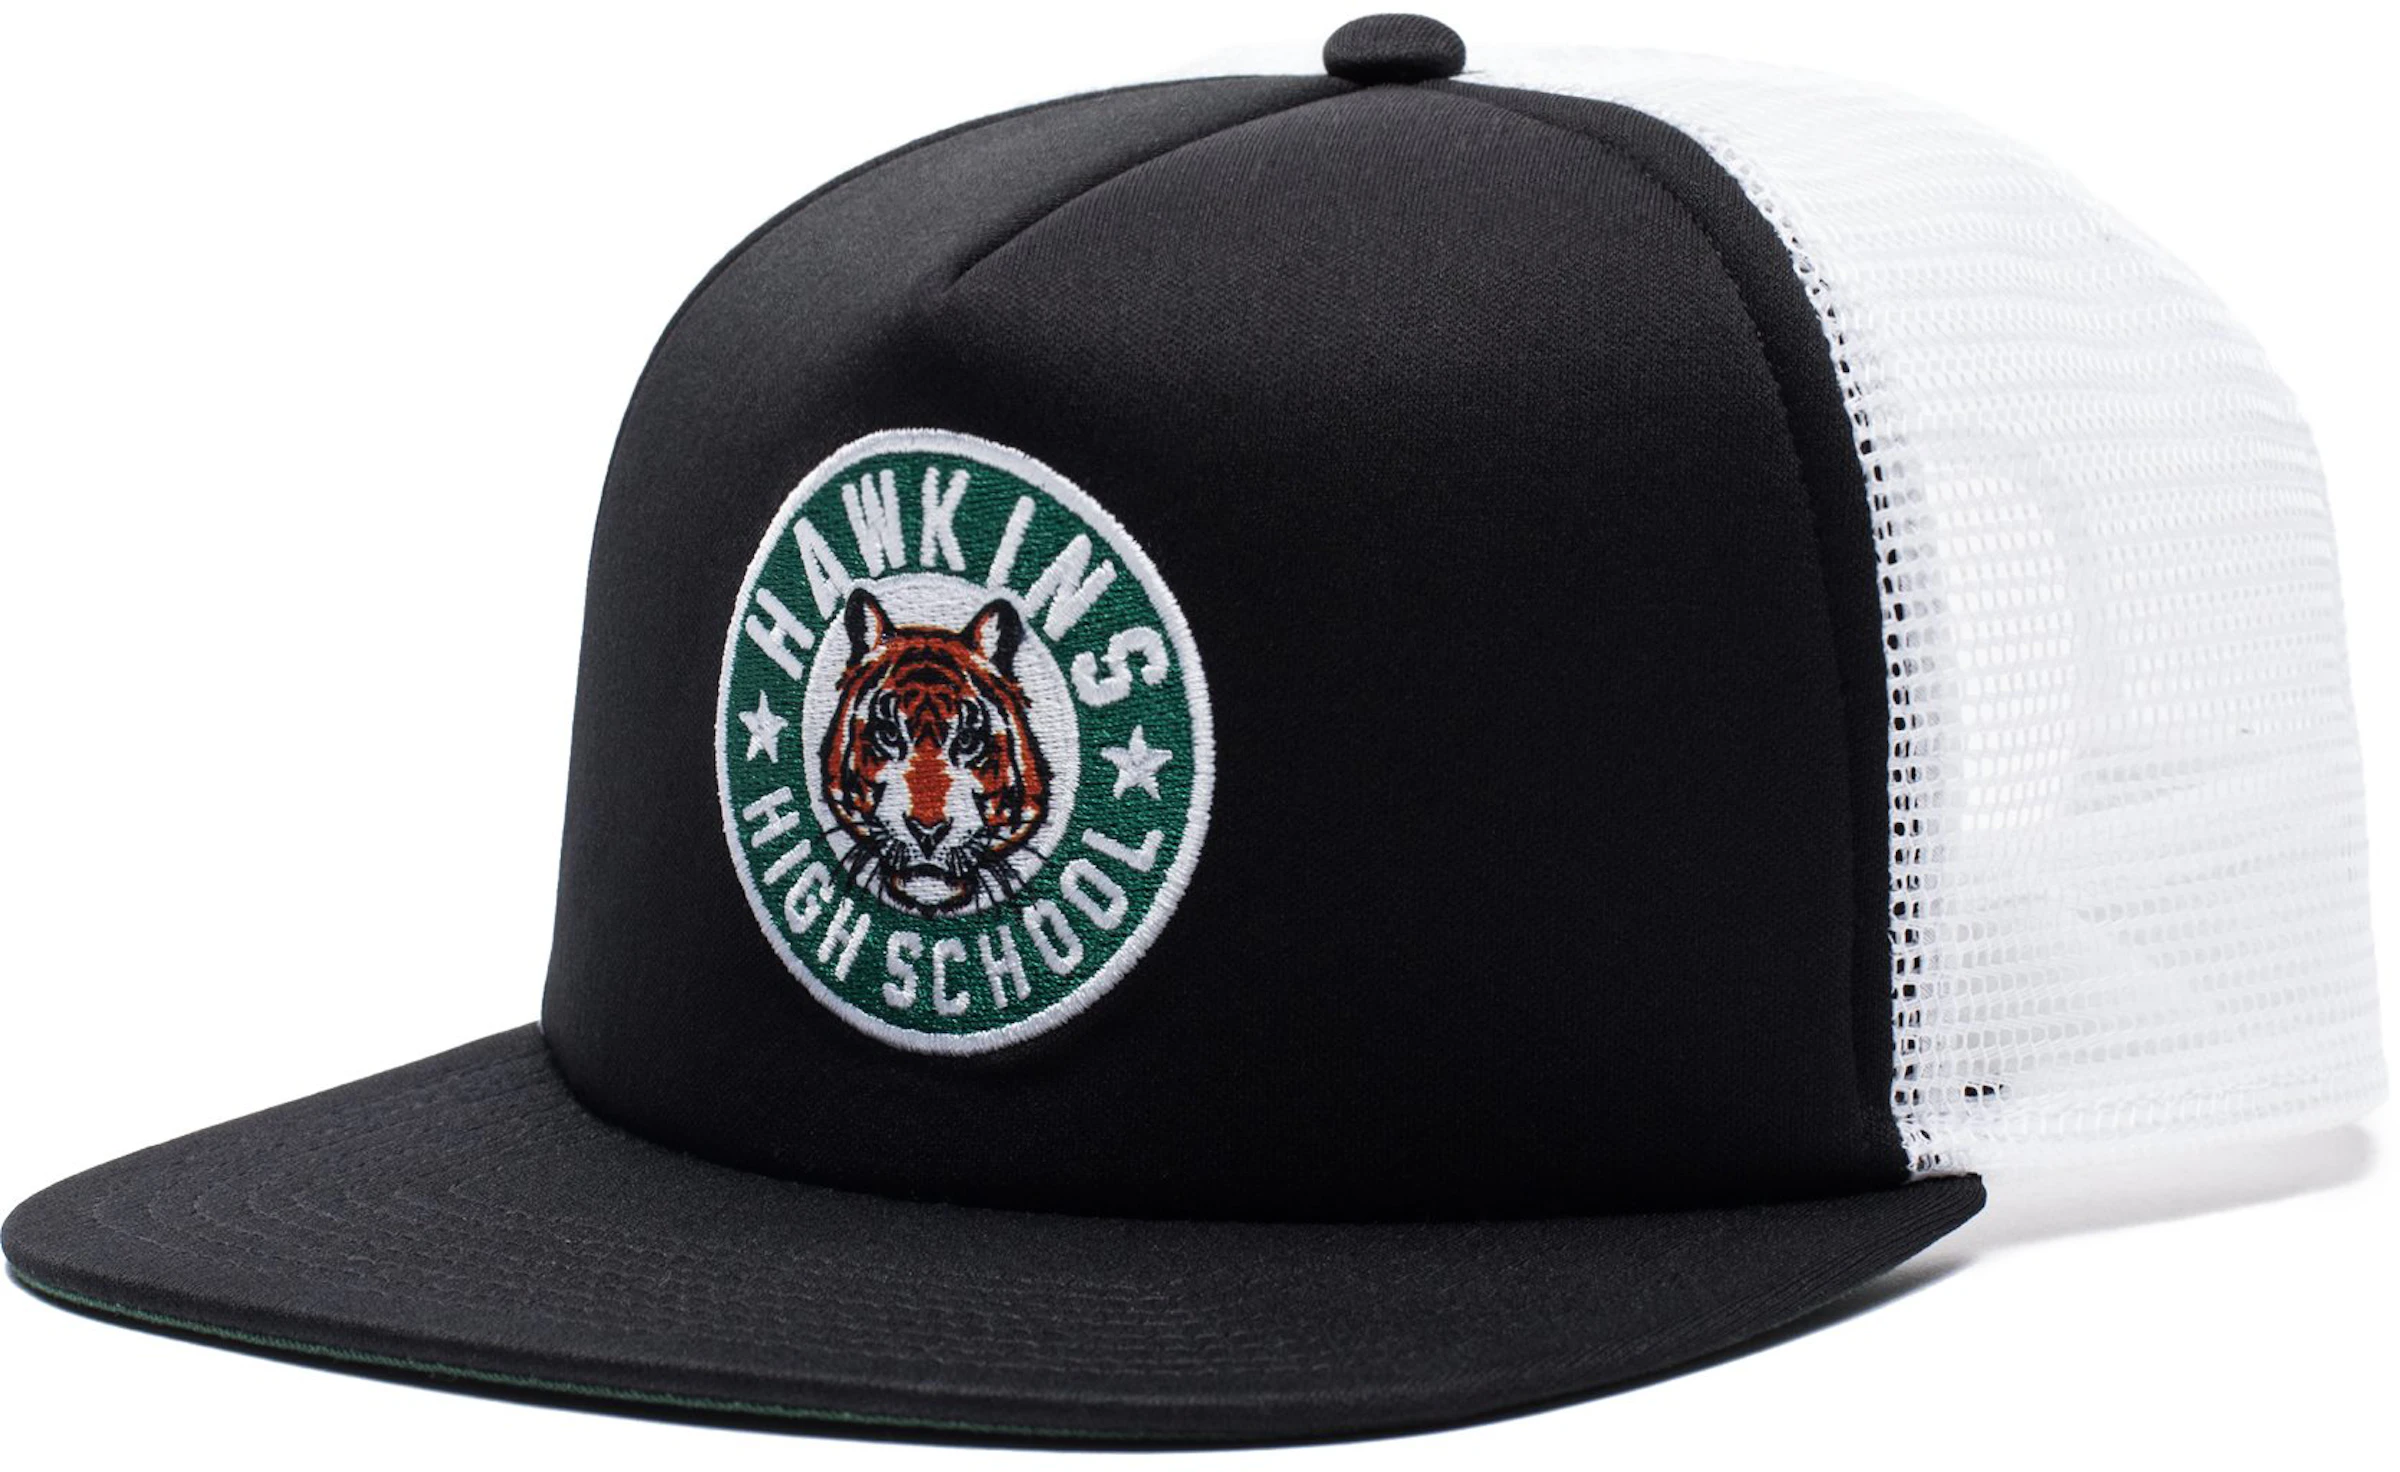 Nike x Things Hawkins High Trucker Hat Black - SS19 -